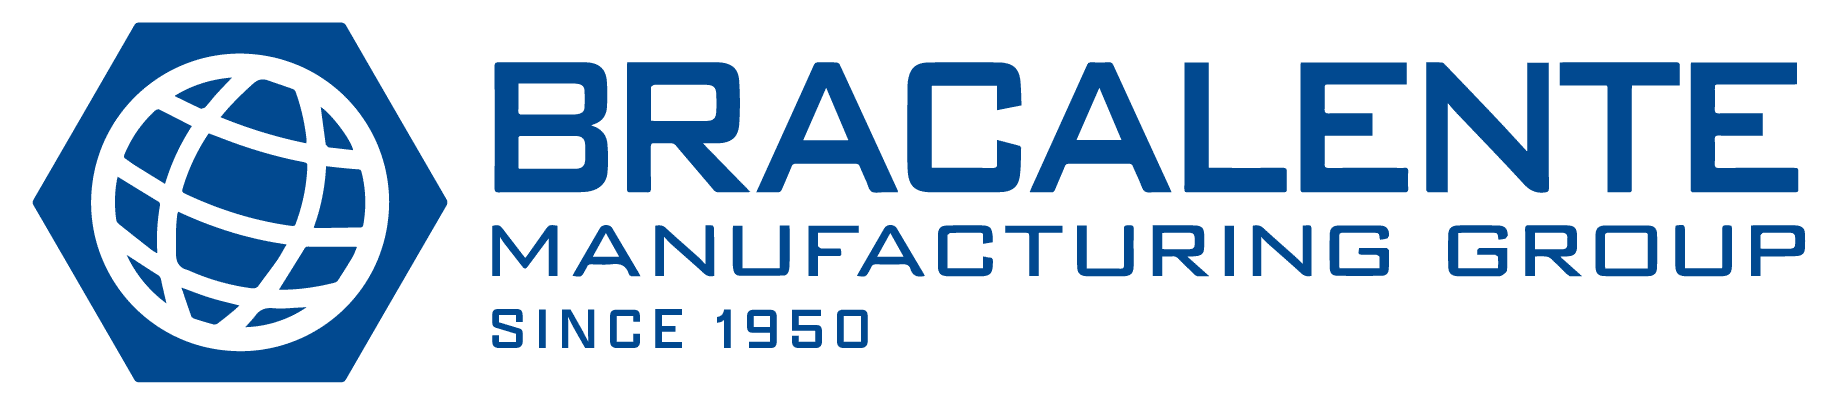 Bracalente Manufacturing Group kubvira 1950